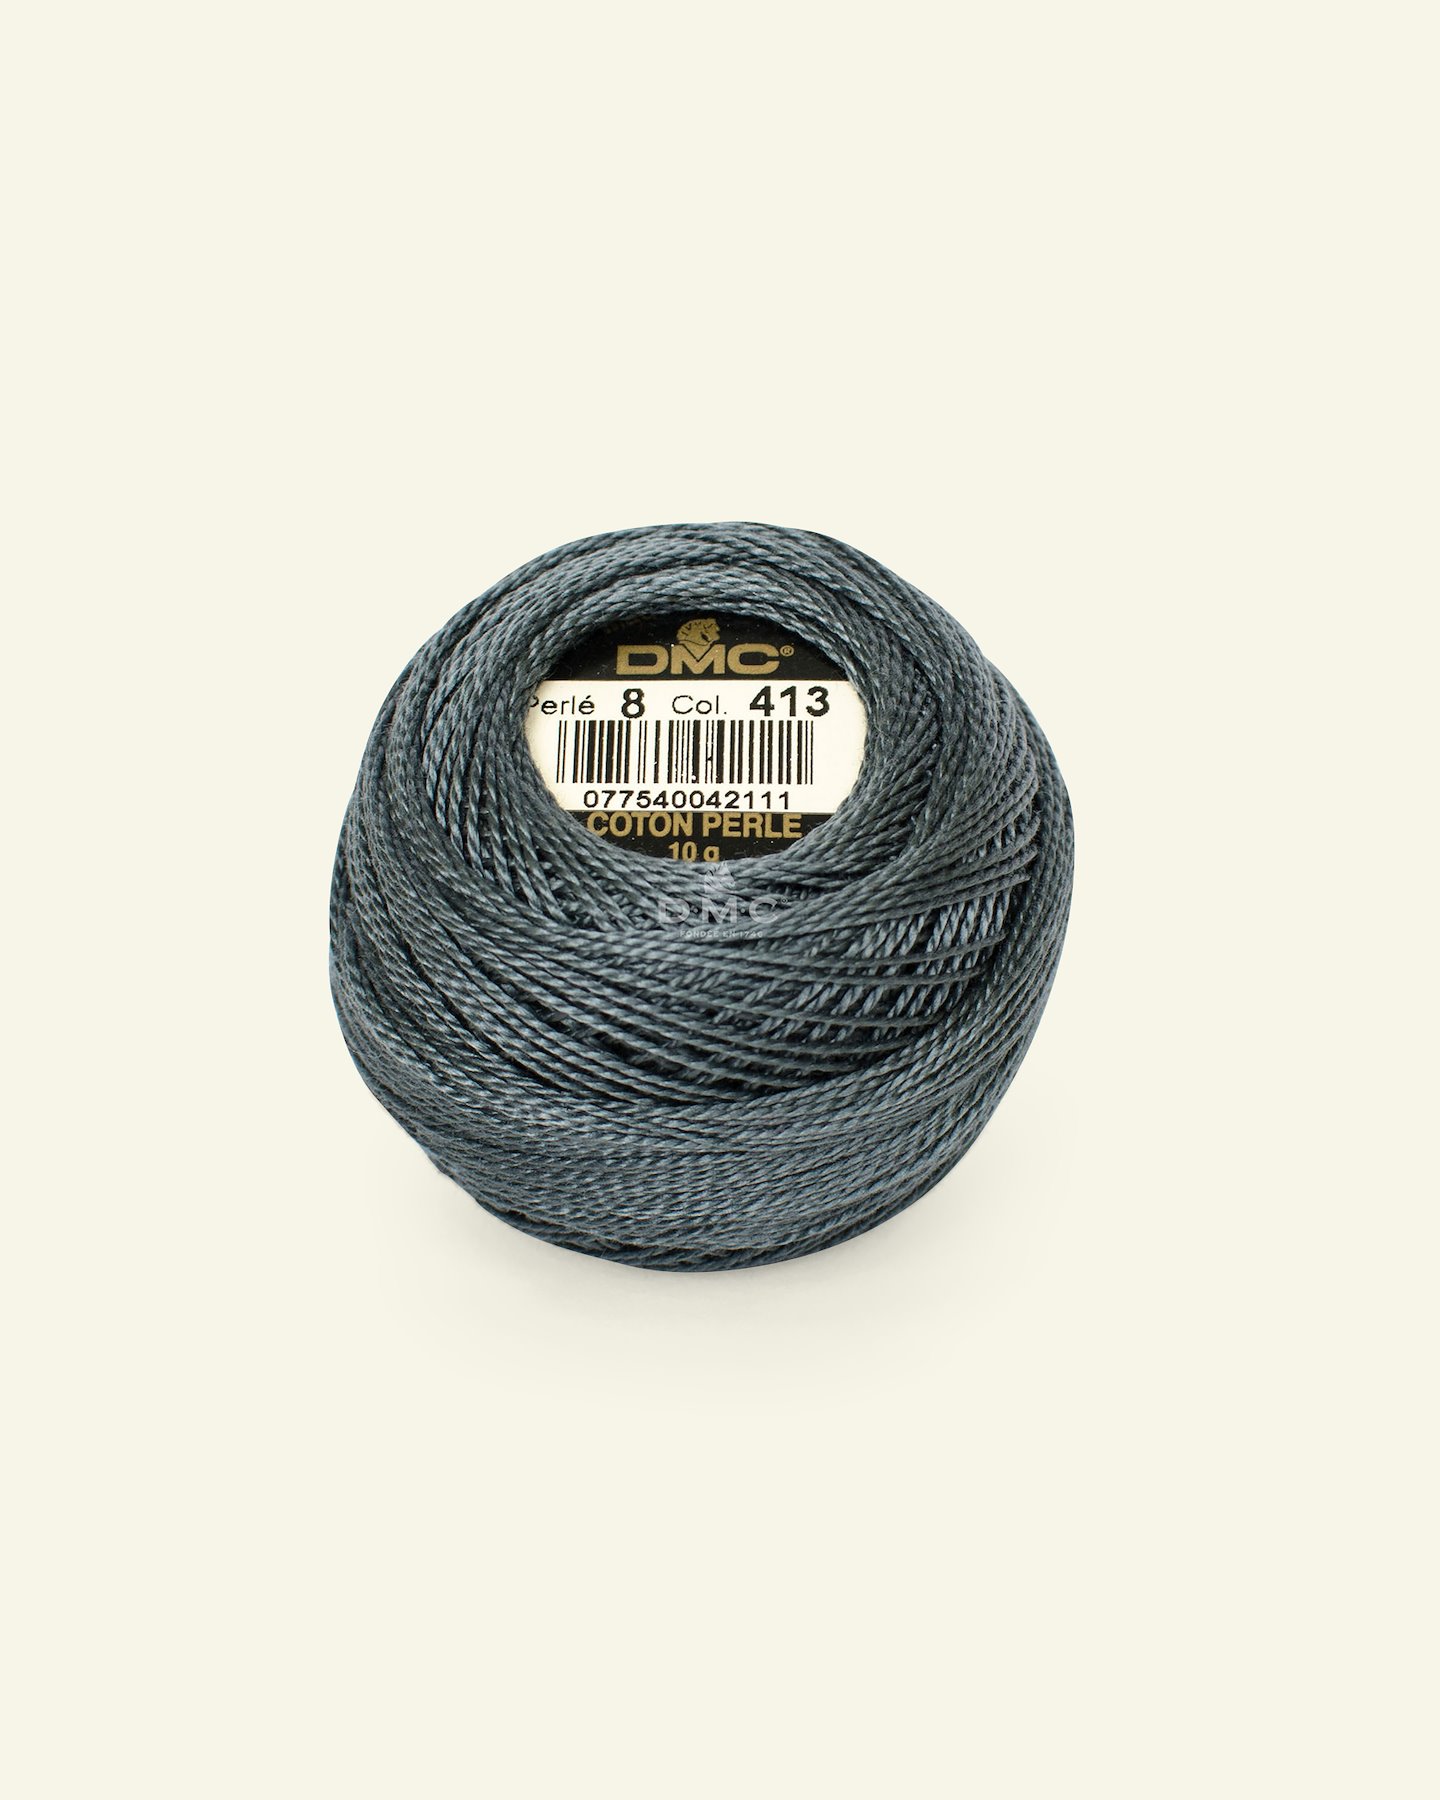 DMC Pearl Cotton yarn col. 413 35122_pack